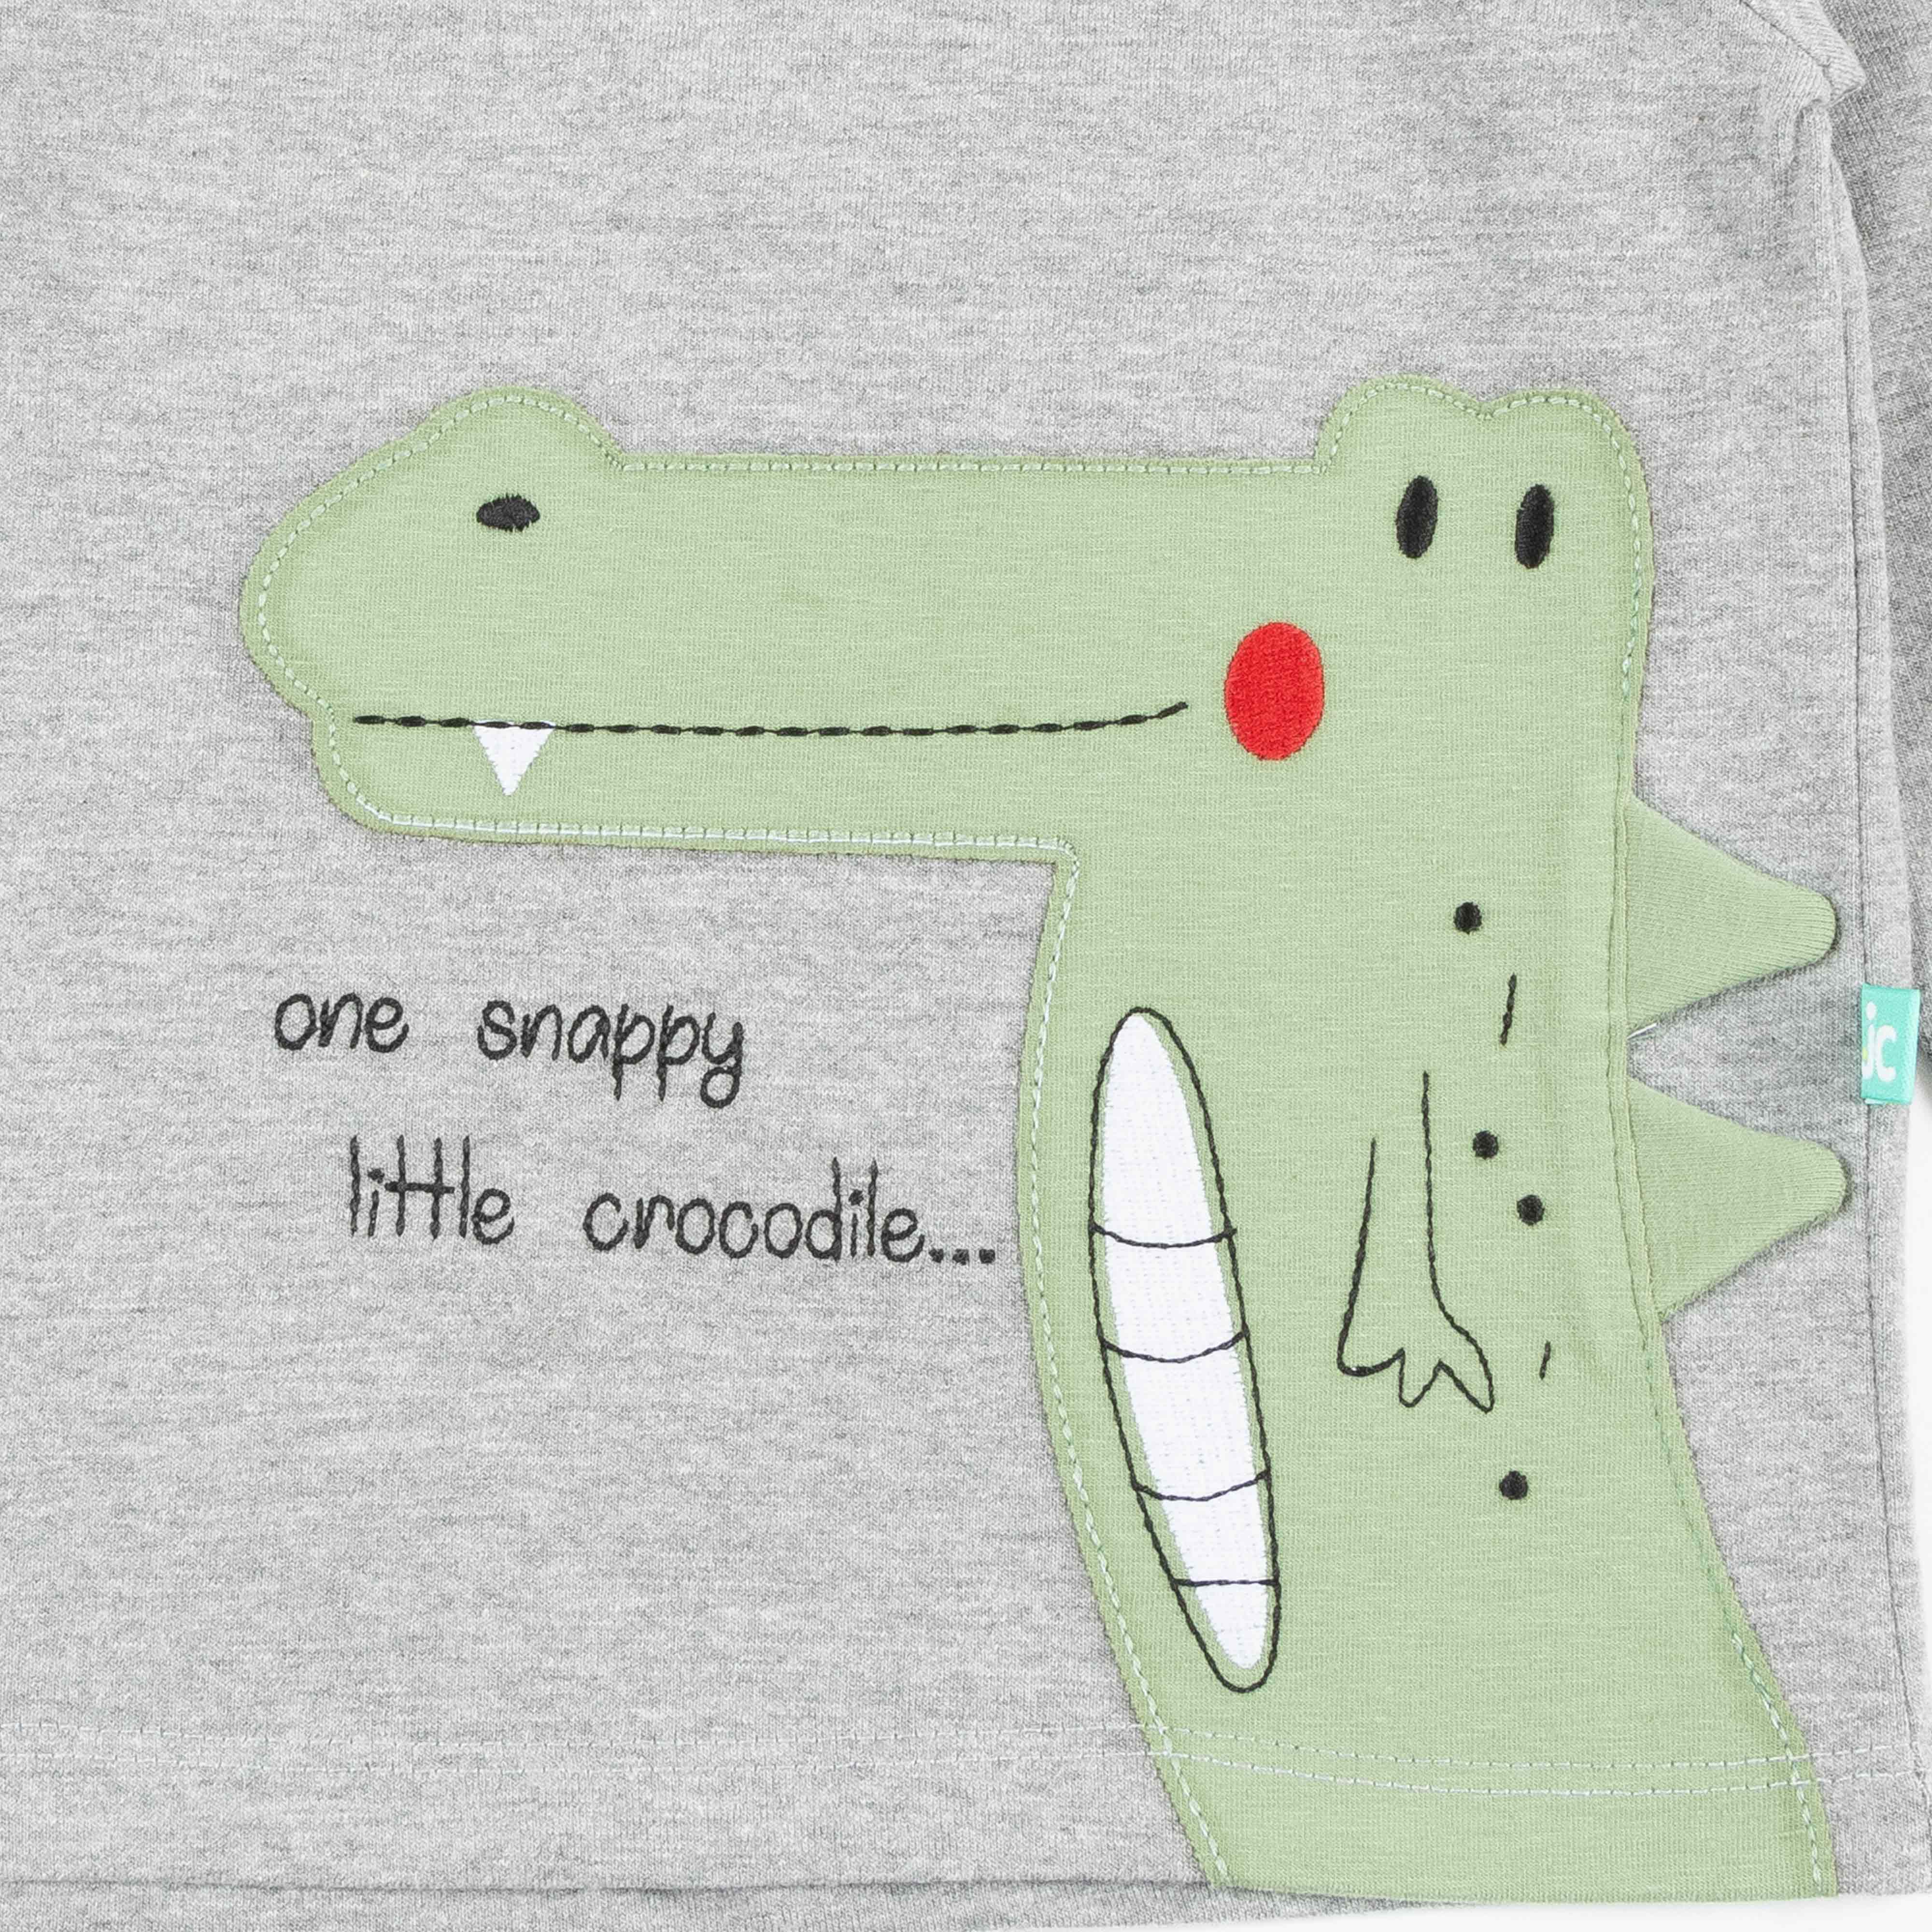 Baby Boys Full Sleeve Crocodile Printed T-Shirt